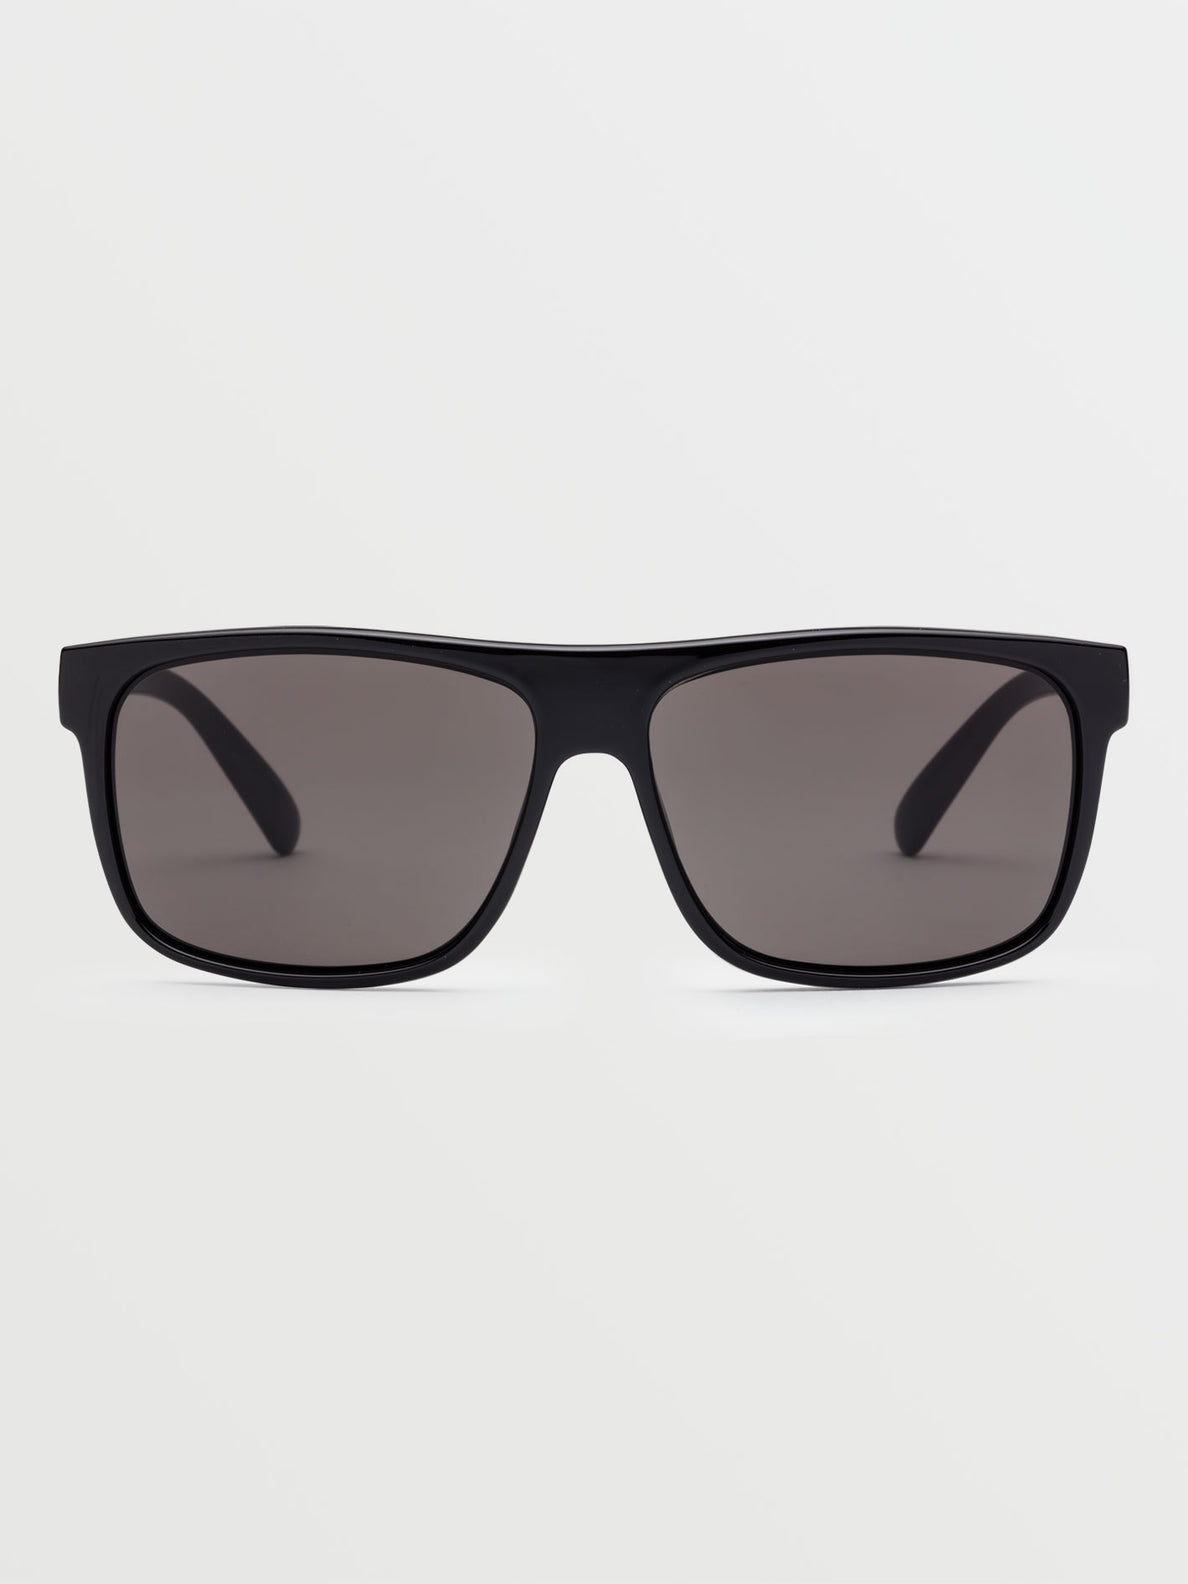 Stoney Sunglasses - Gloss Black/Gray